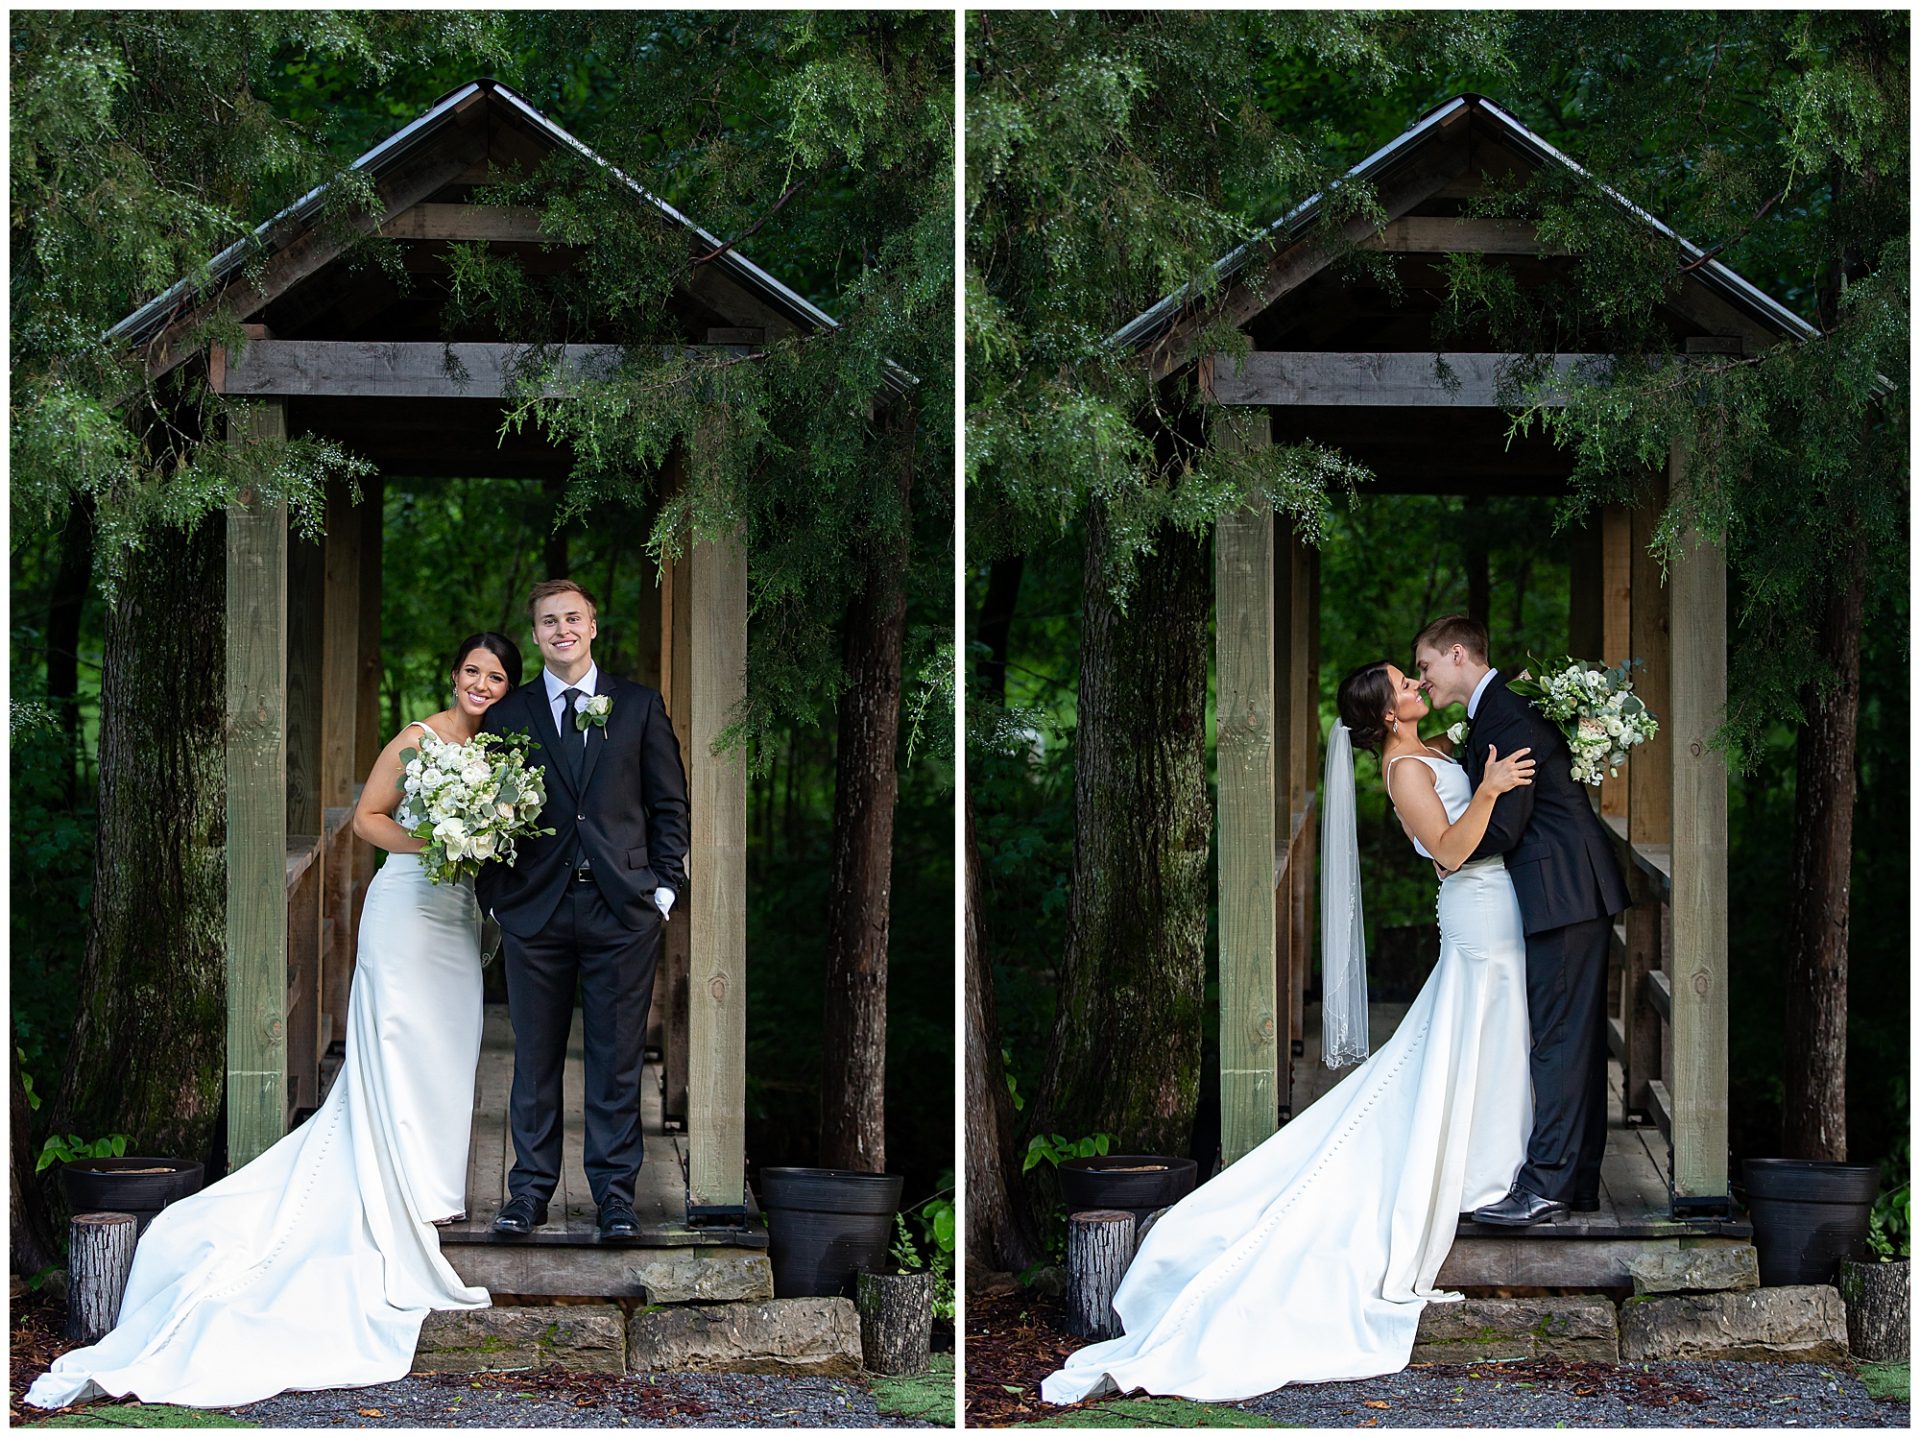 Melanie-Grady-Photography-Chapel-in-the-woods-firefly-lane-wedding-58-1